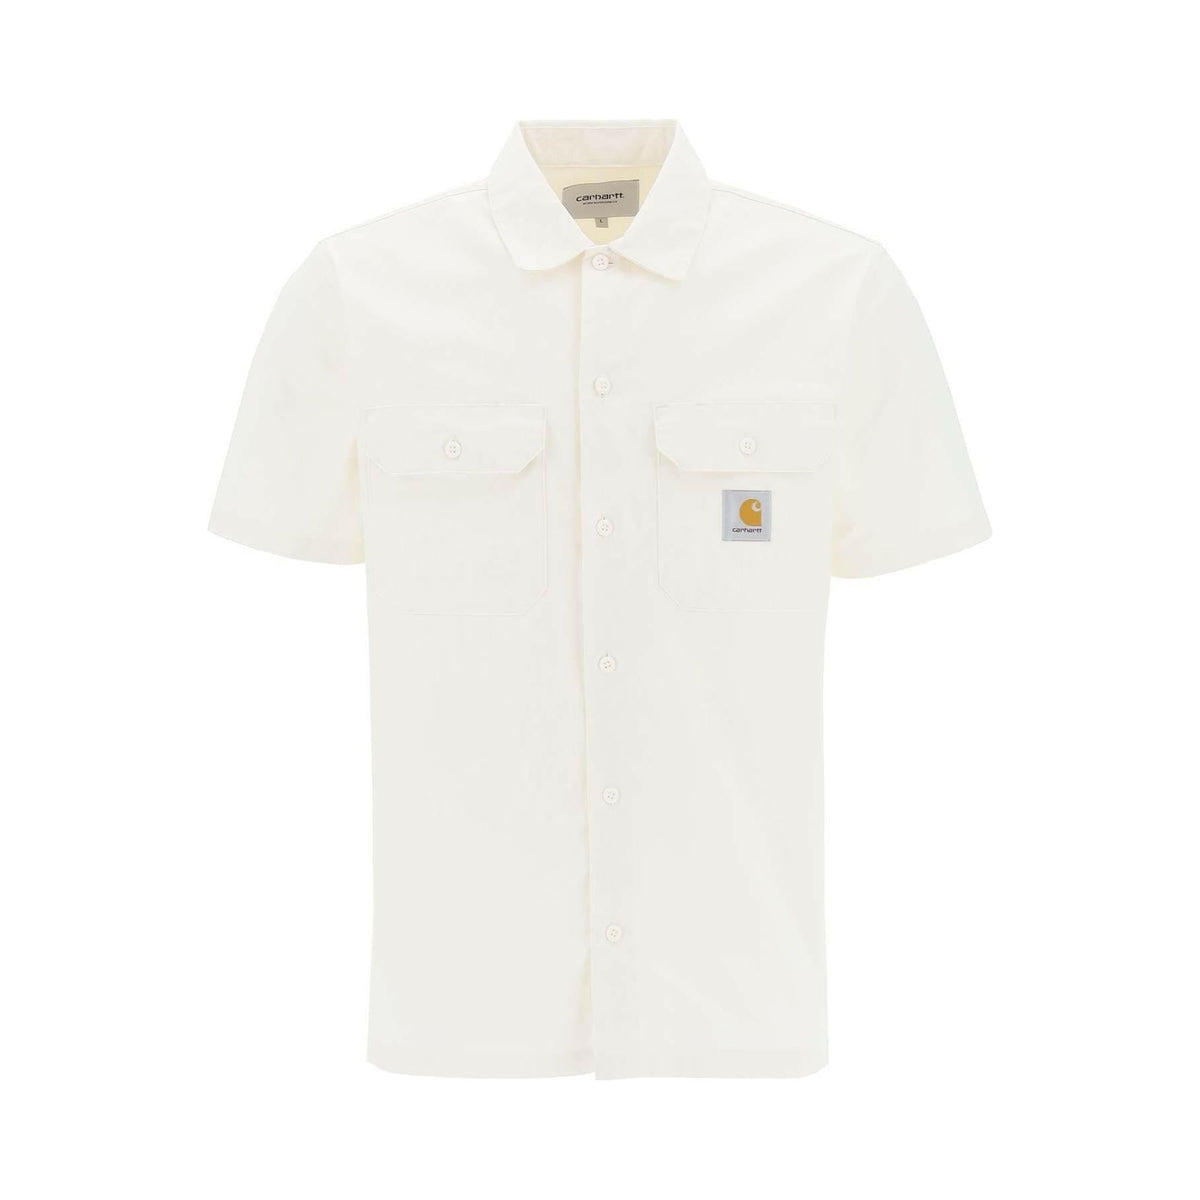 CARHARTT WIP - White Wax Compact Cotton Twill Short Sleeved Shirt - JOHN JULIA